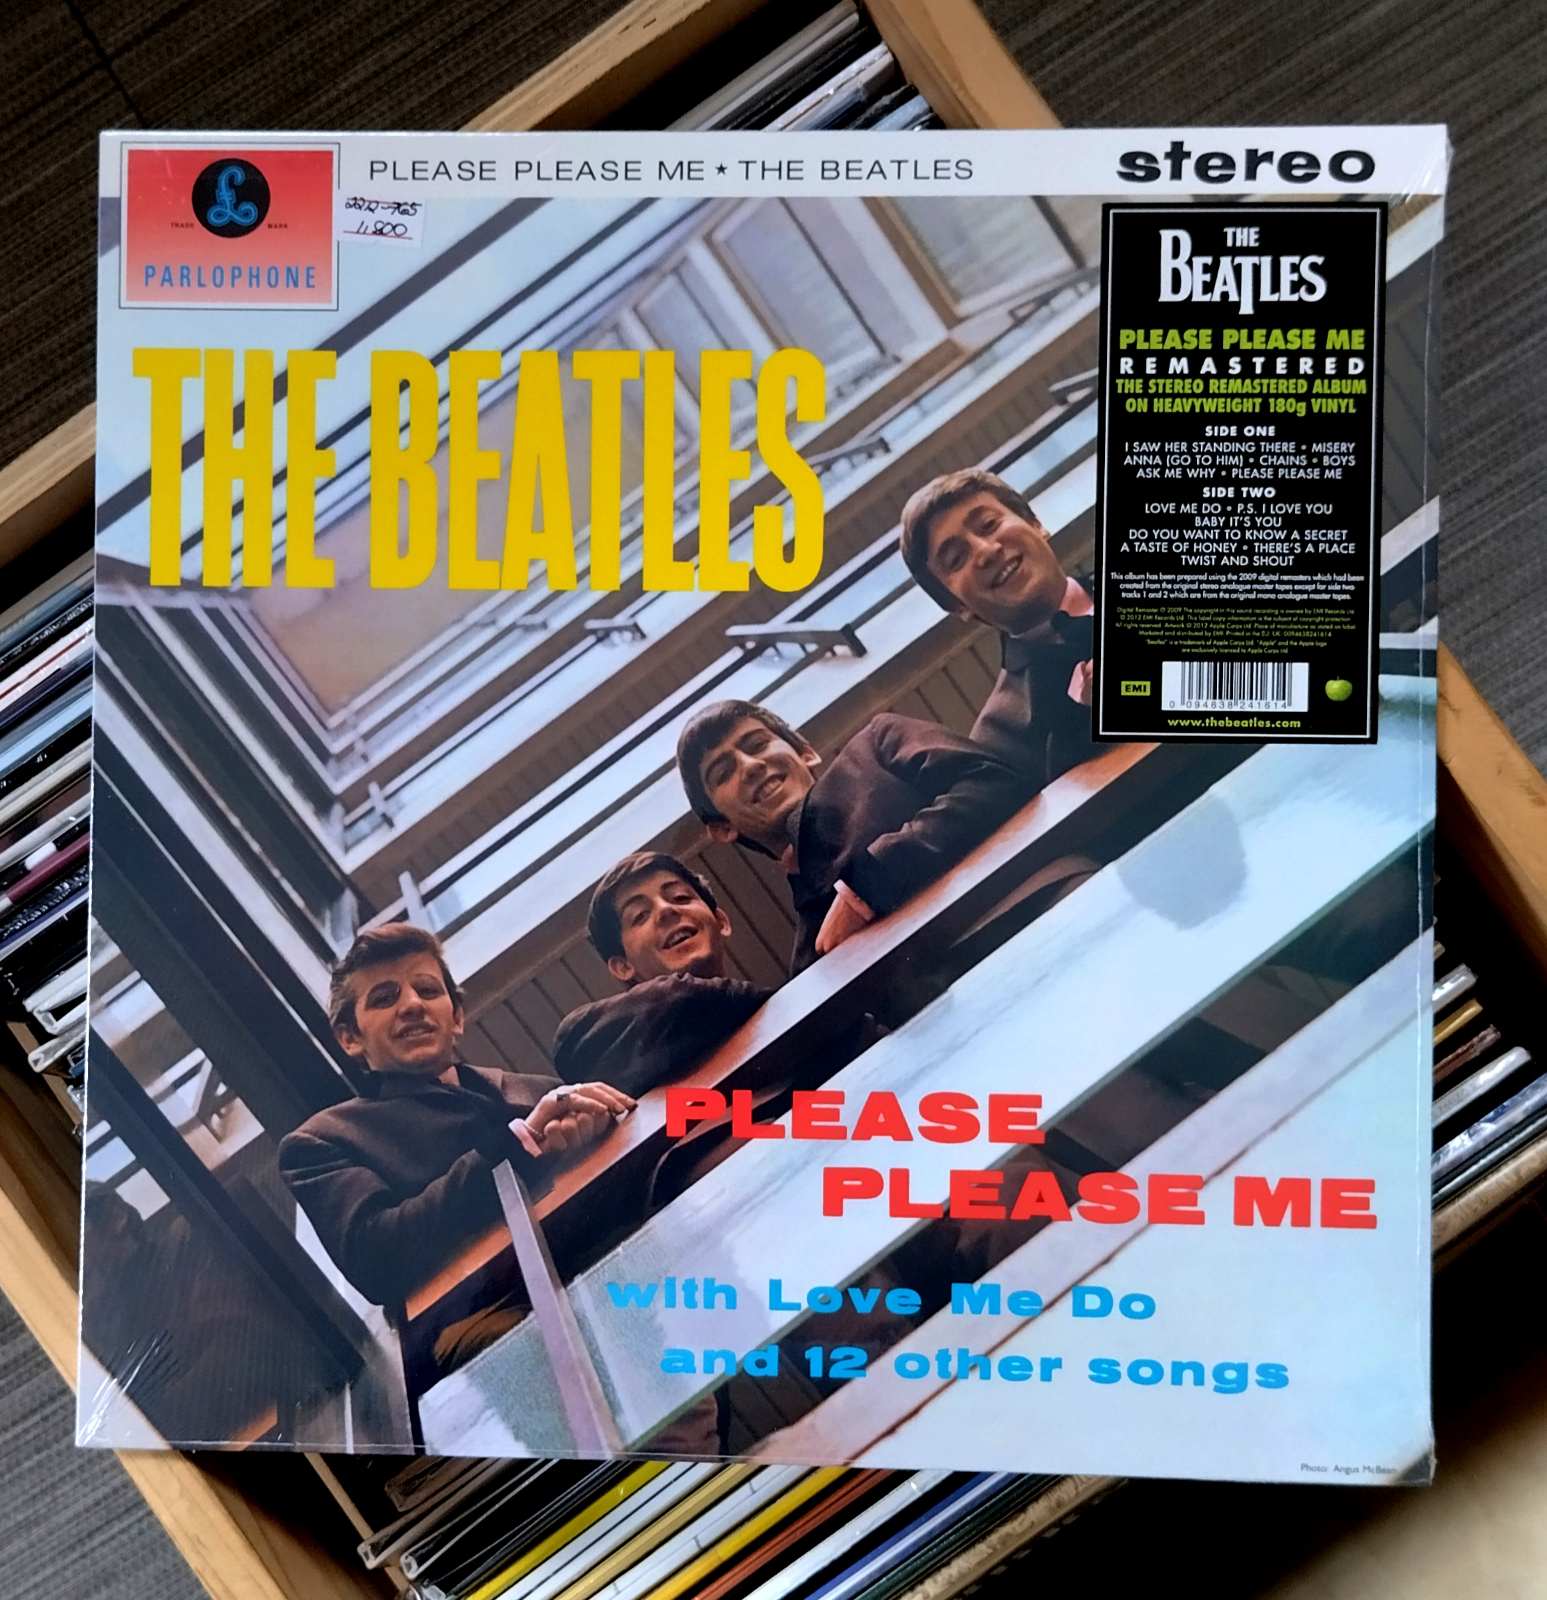 The Beatles: Please Please Me